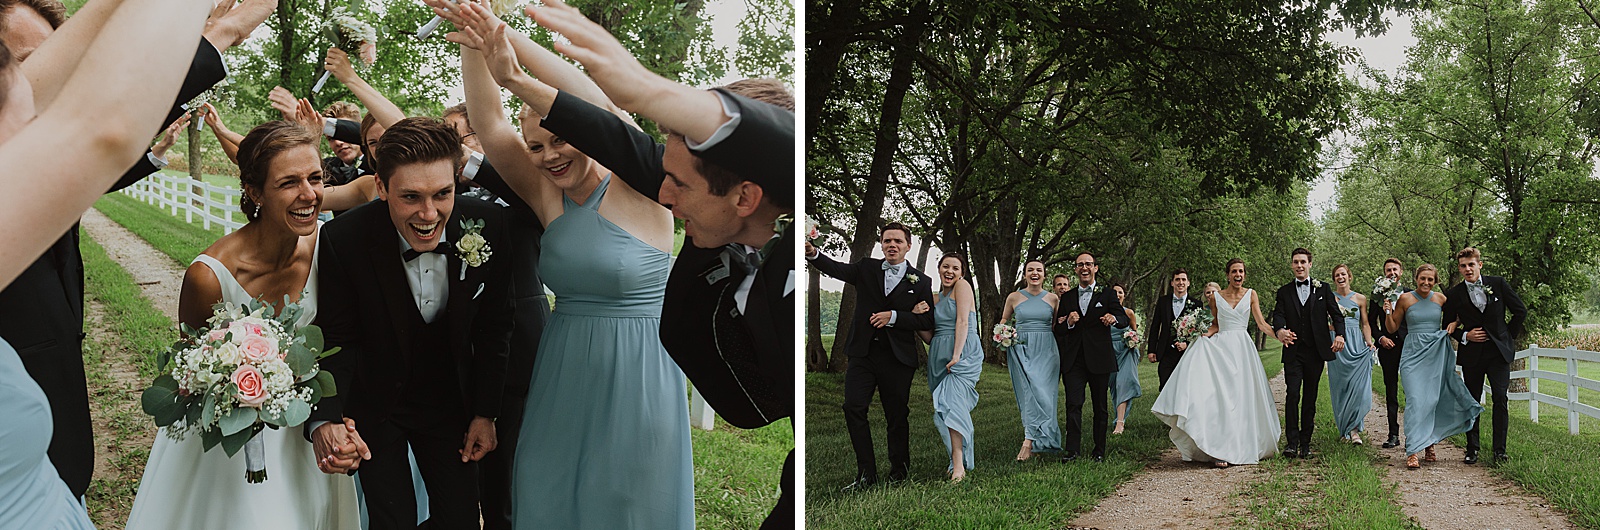 Eighteen Ninety Kansas City wedding captured by Caitlyn Cloud Photography